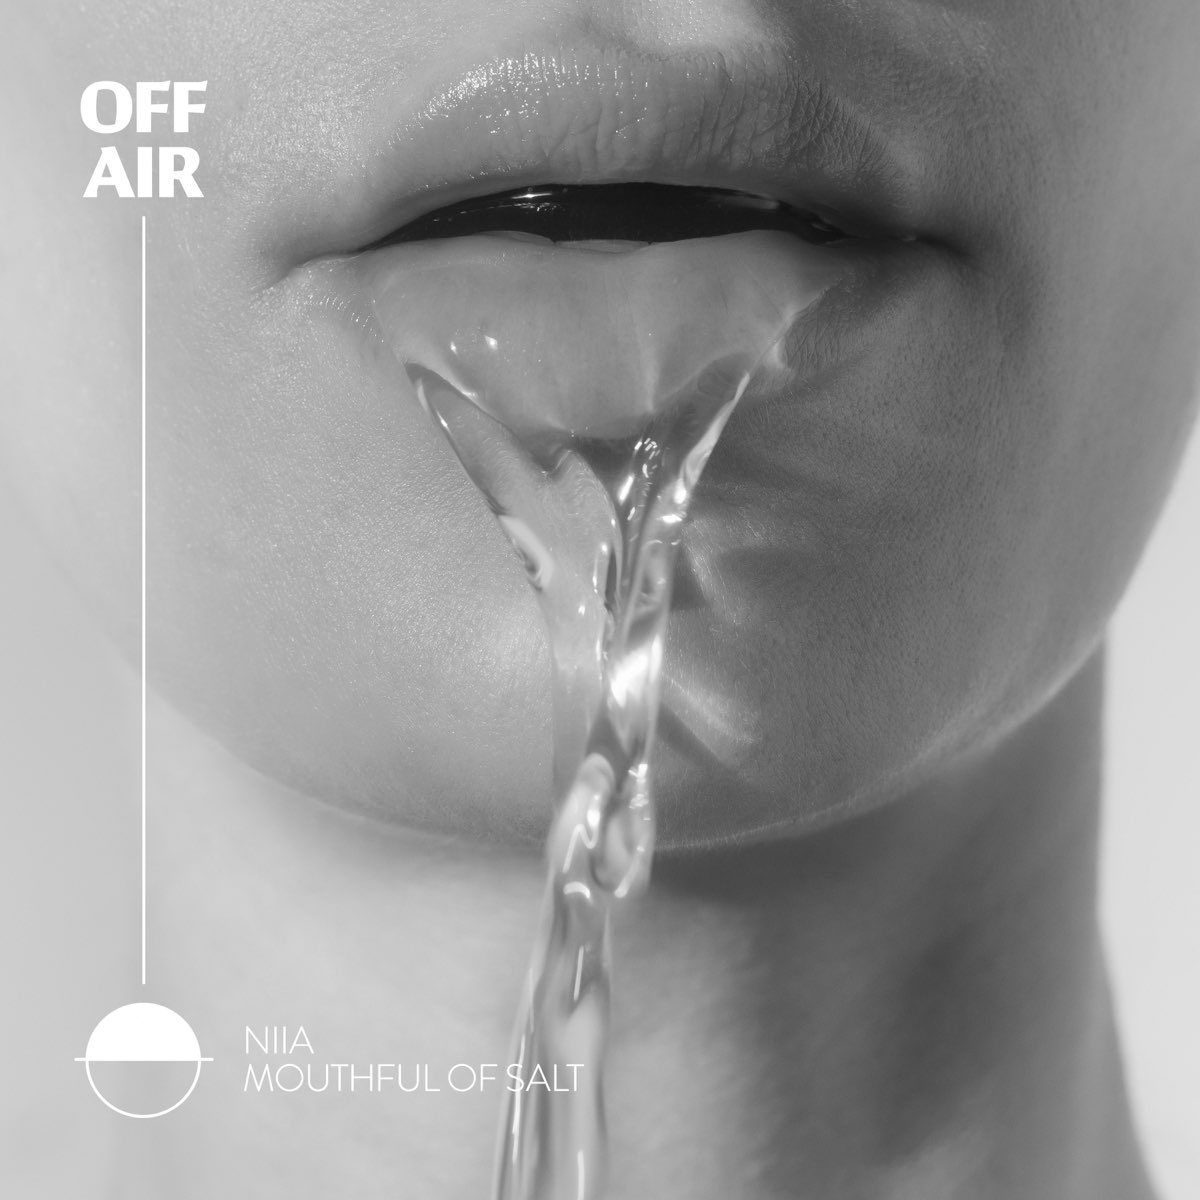 OFFAIR: Mouthful of Salt - Album by Niia - Apple Music